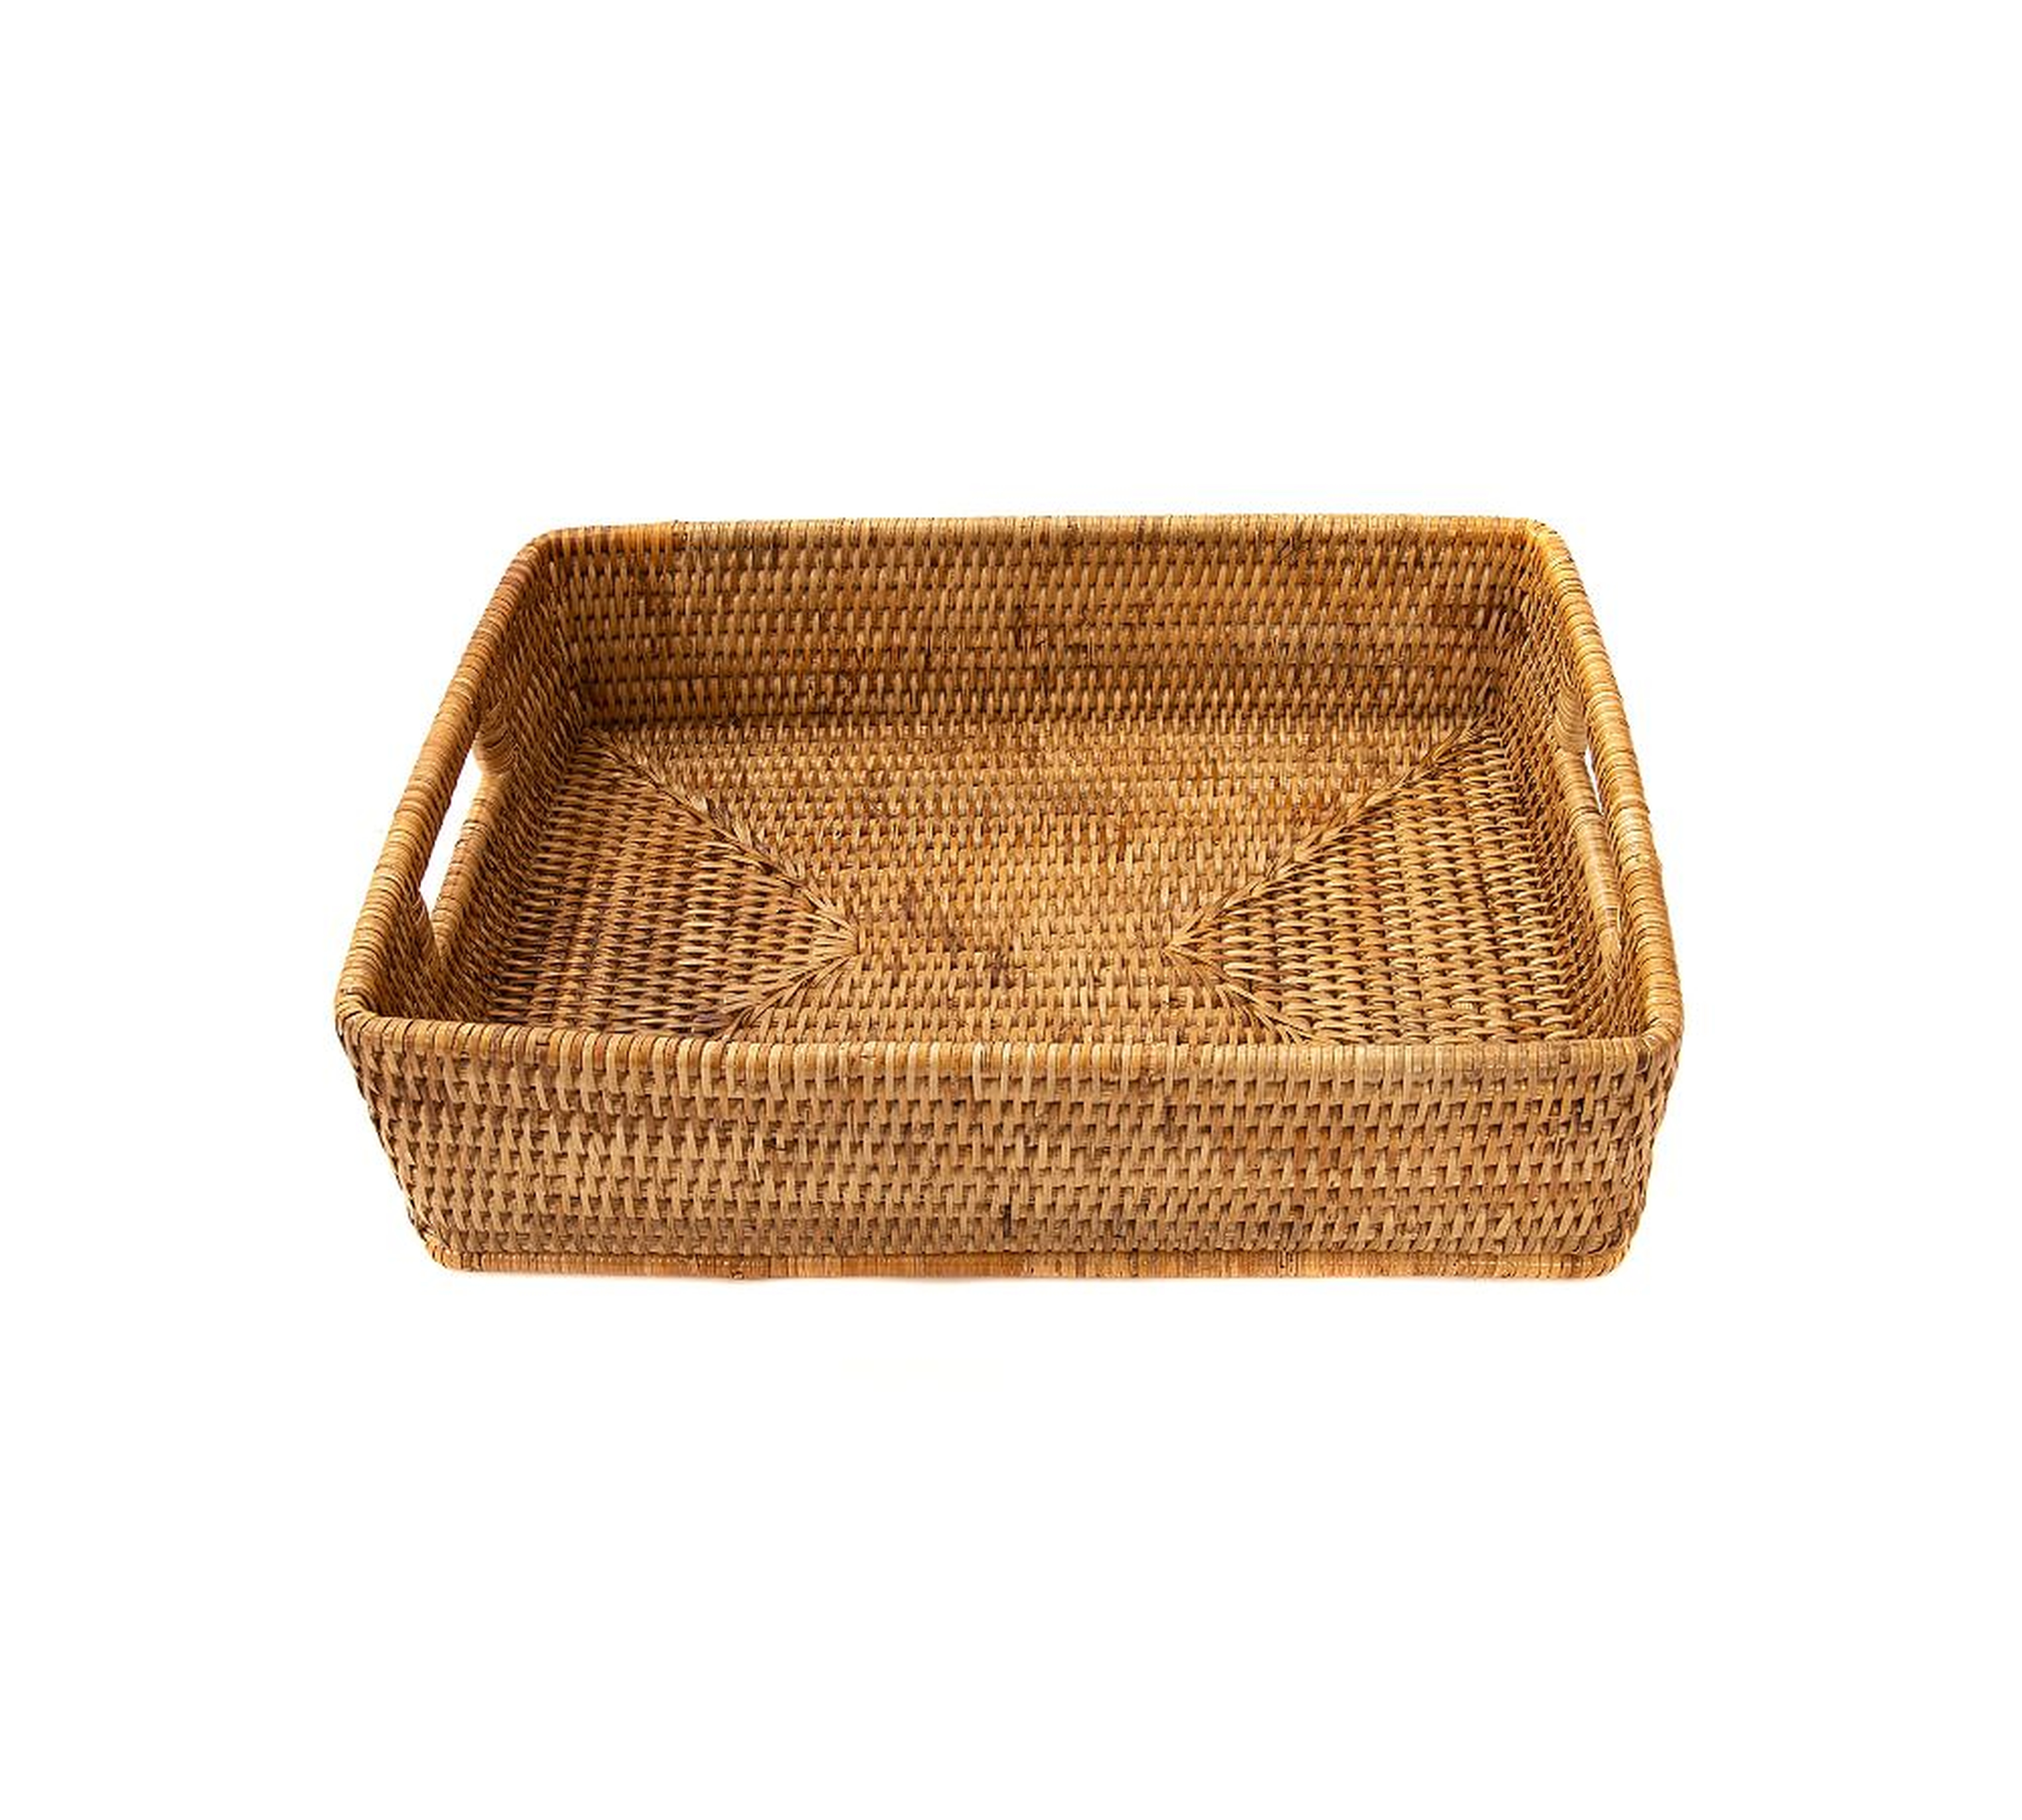 Tava Handwoven Rattan Rectangular Storage Basket, Small, Natural - Pottery Barn